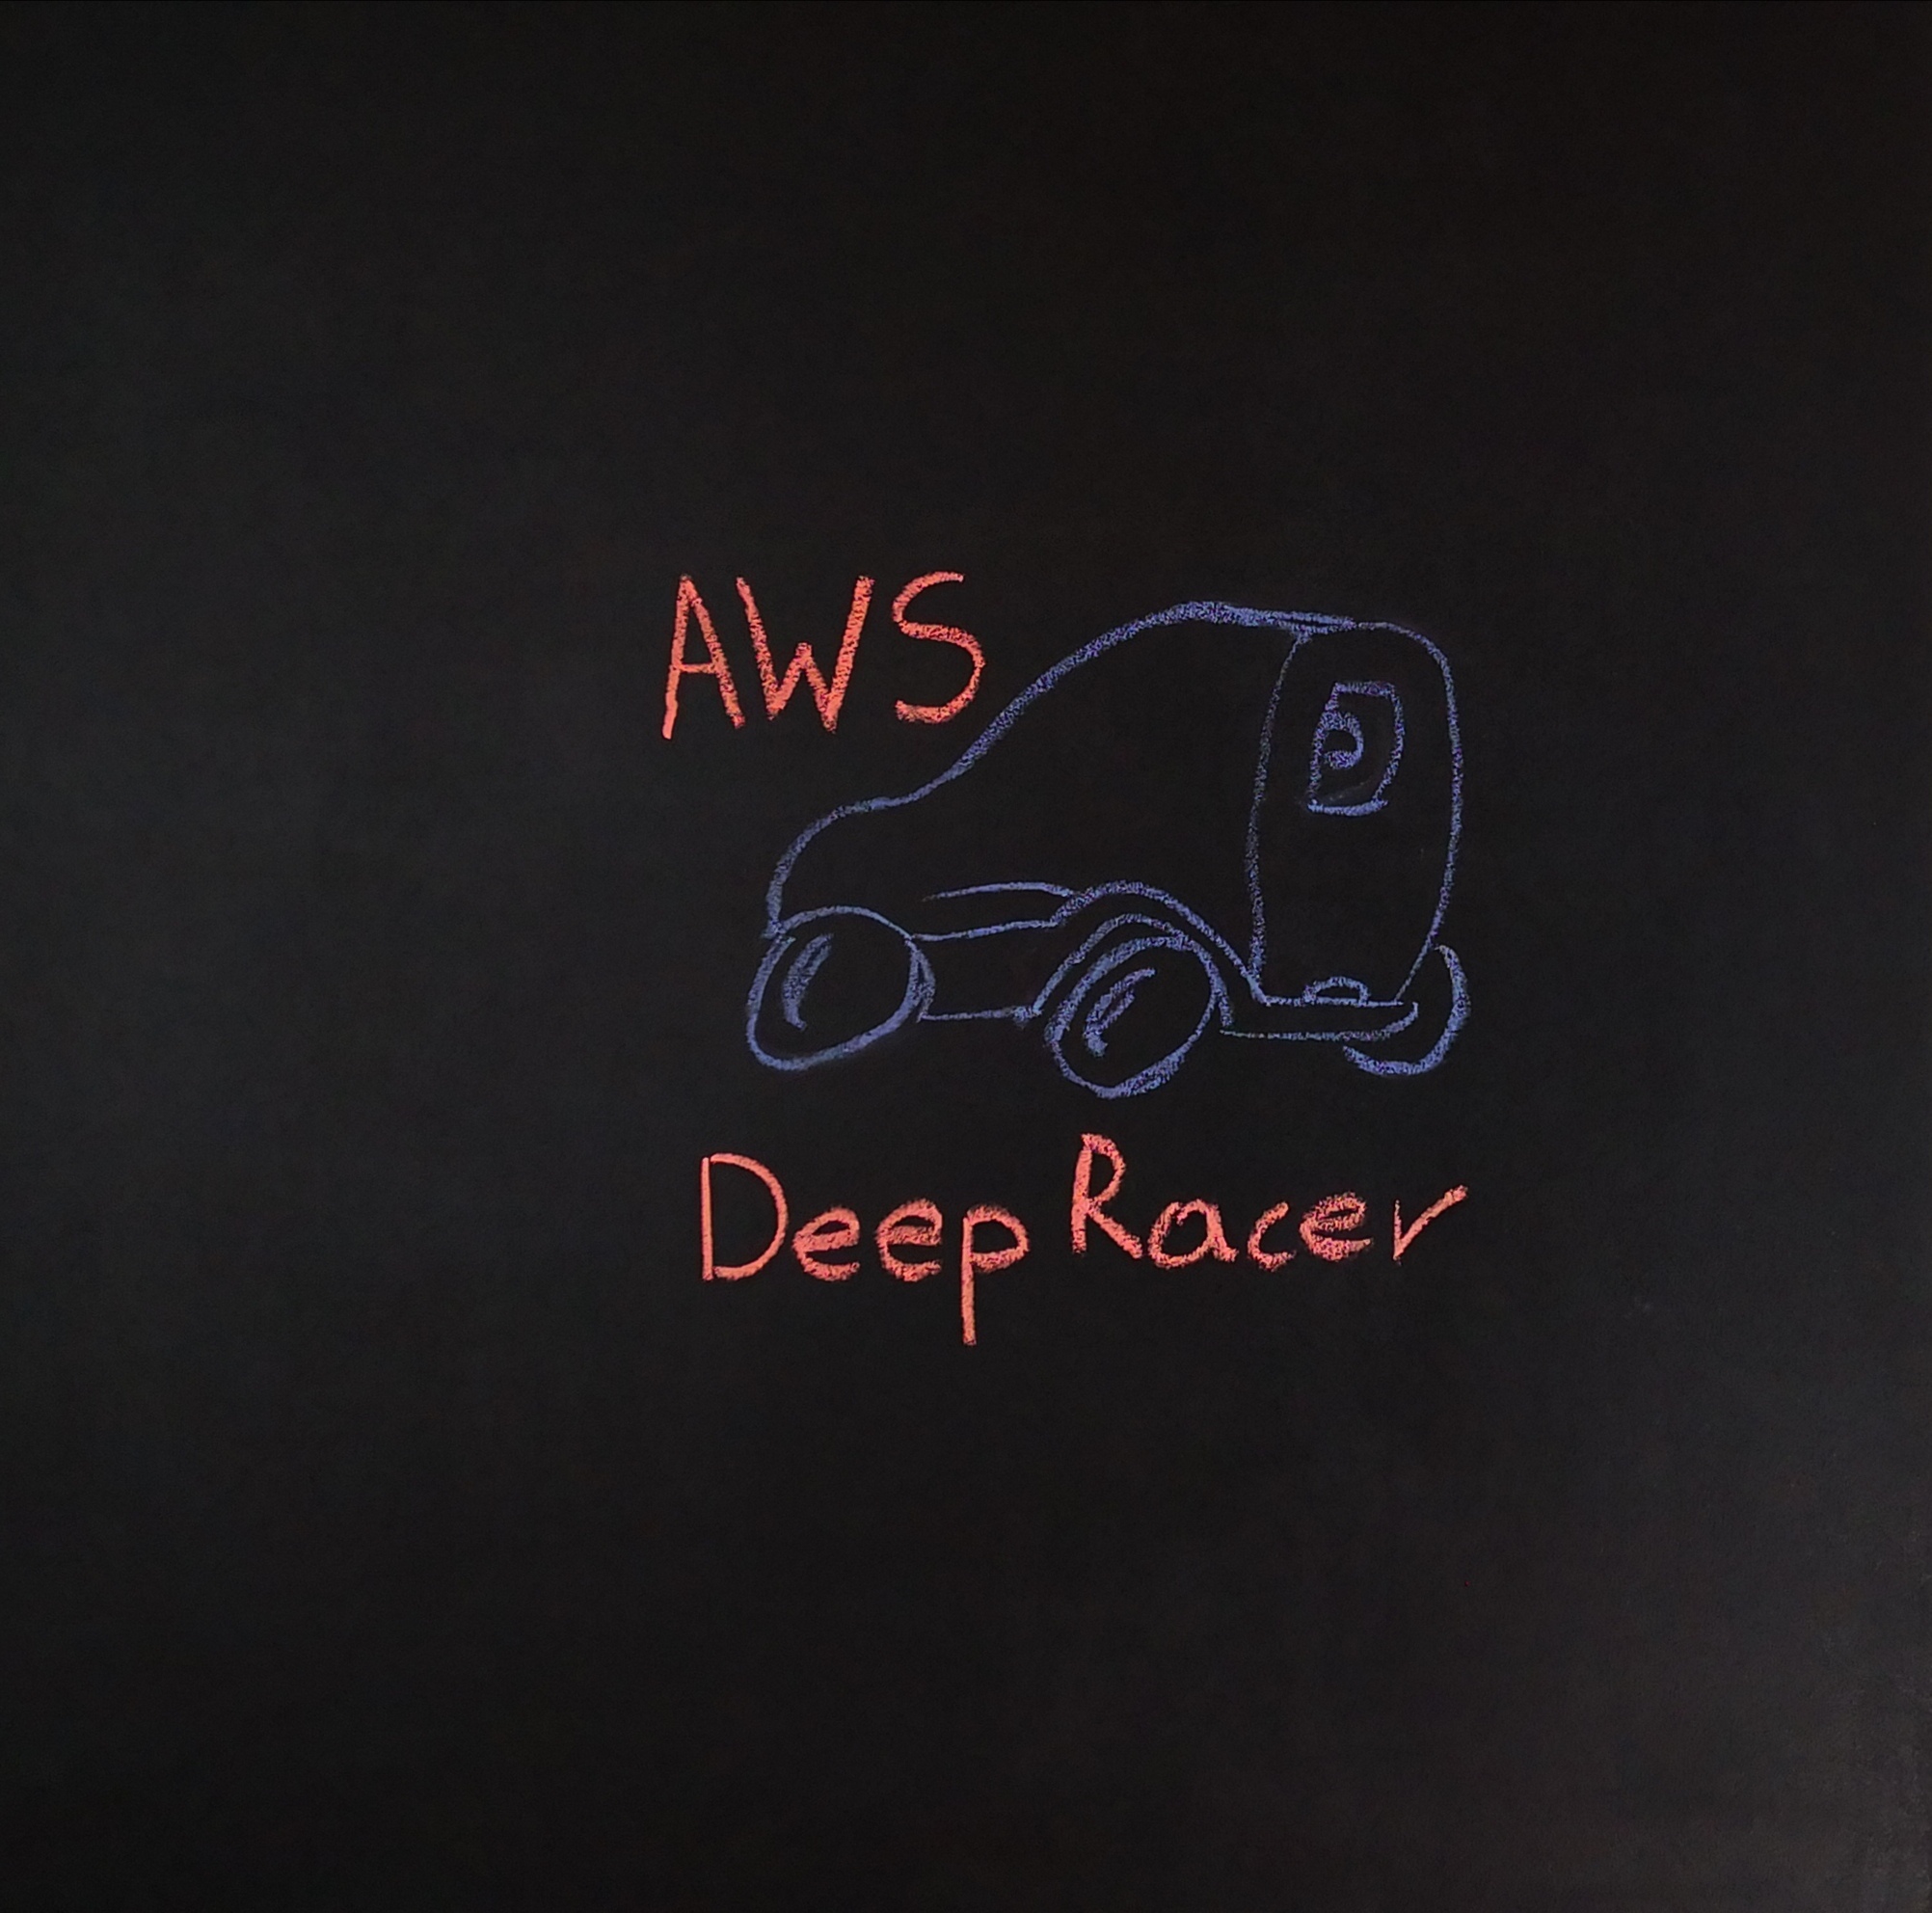 AWS DeepRacer drawn on a blackboard